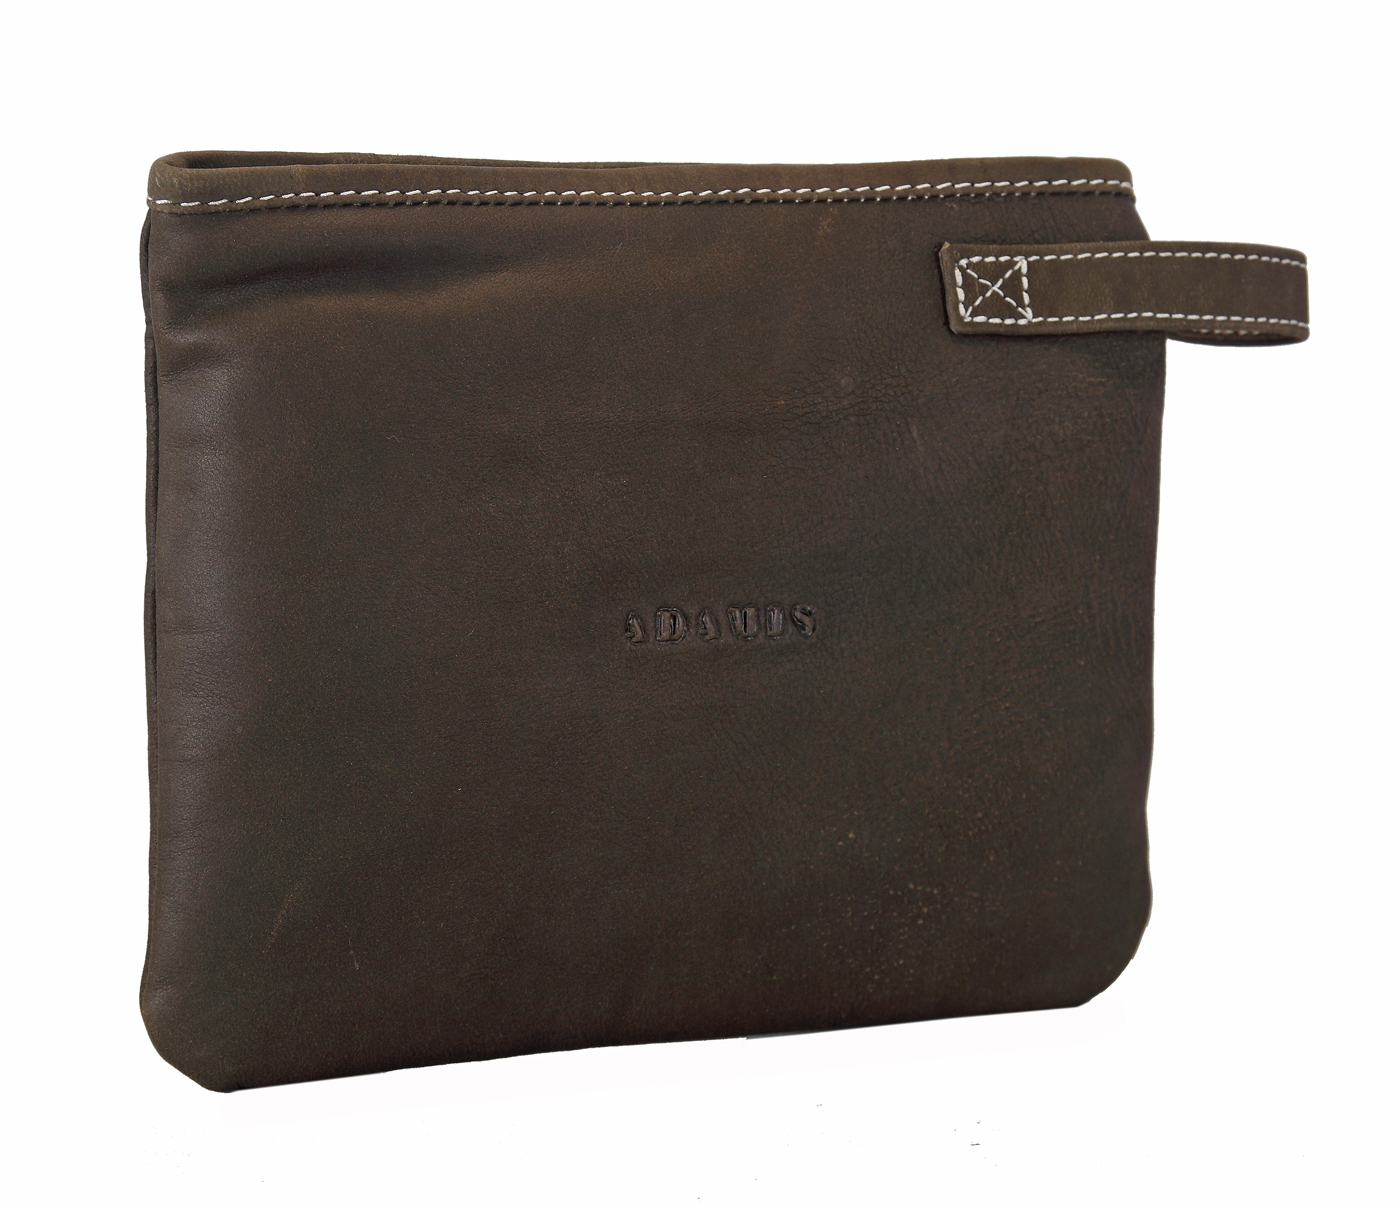 Multi Utility Pouch--Unisex multi purpose pouch in Genuine Leather - Brown.